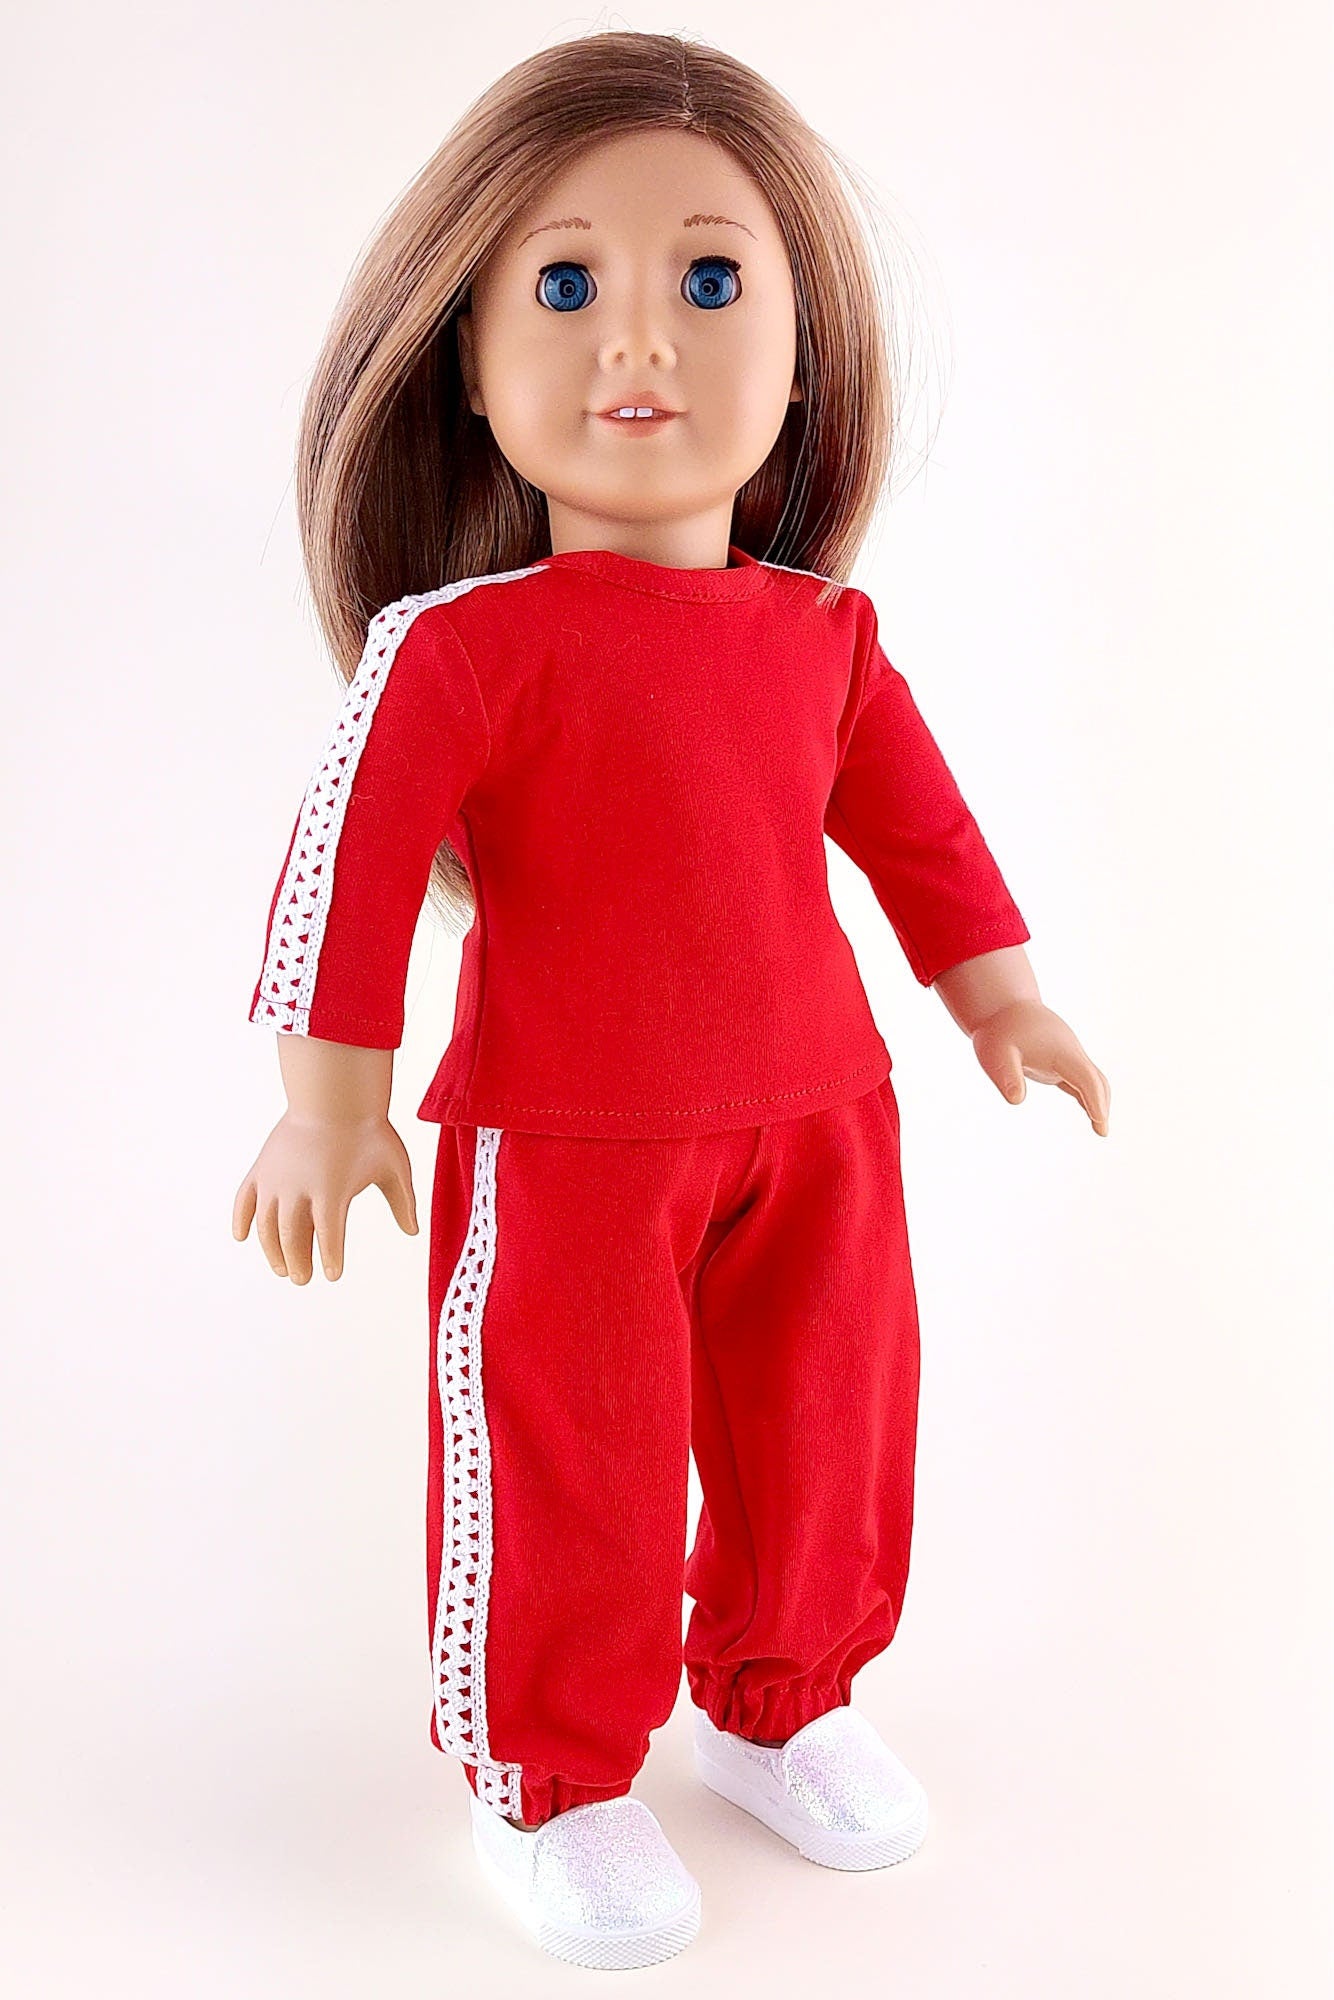 American Girl Doll Pajama - Red Sweatshirt and Pants Dolls - 18